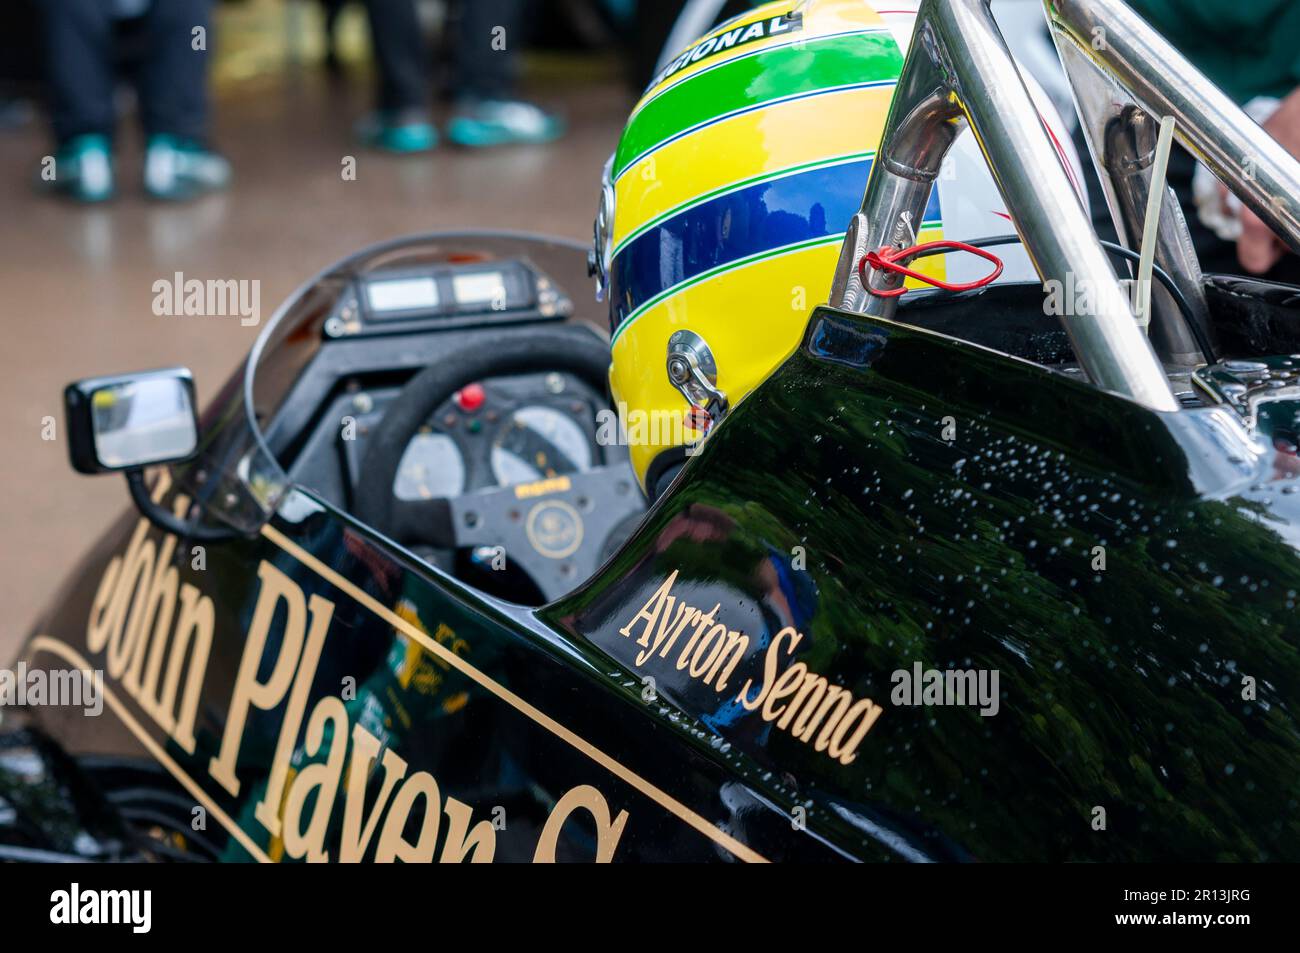 Ayrton Senna Lotus Formula 1 Grand Prix racing car at Goodwood Festival of Speed, UK, 2016. Historic JPS F1 race car previously driven by Ayrton Senna Stock Photo